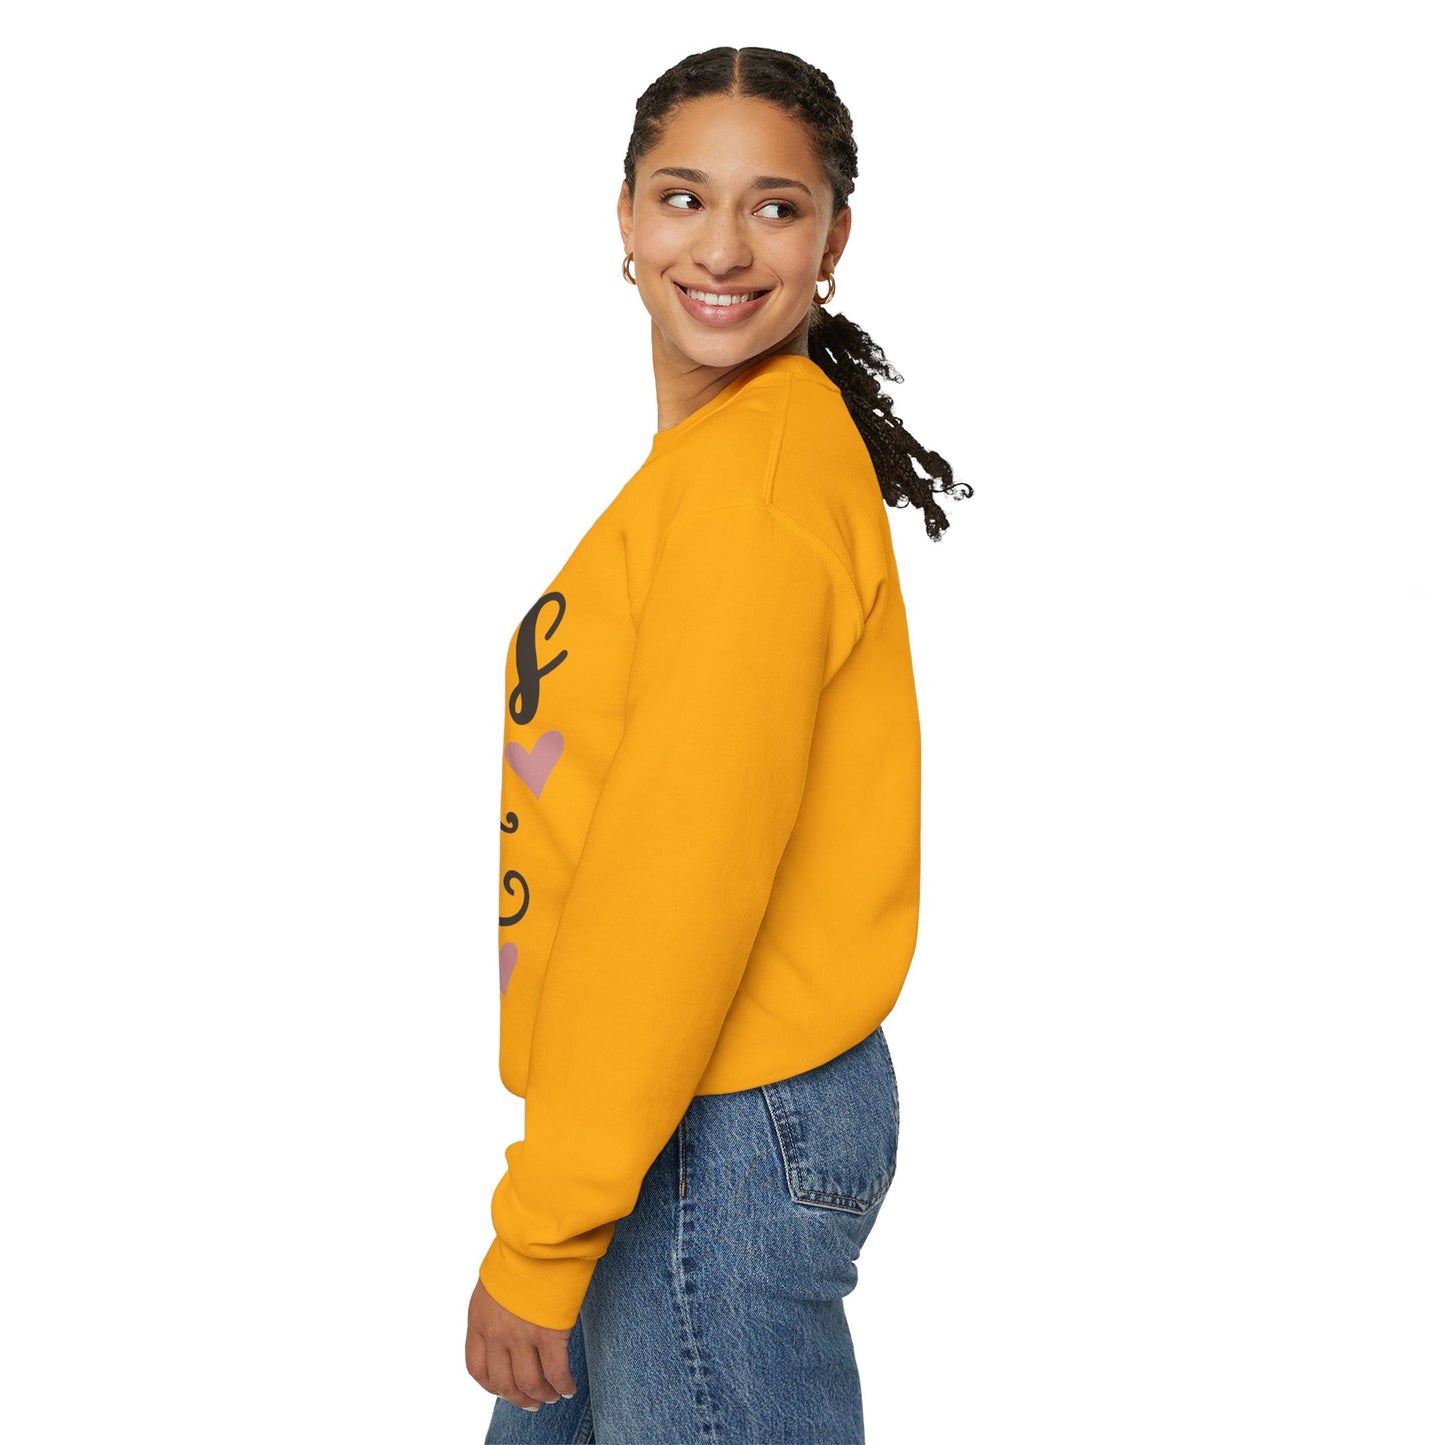 World Best Mom - Unisex Heavy Blend™ Crewneck Sweatshirt